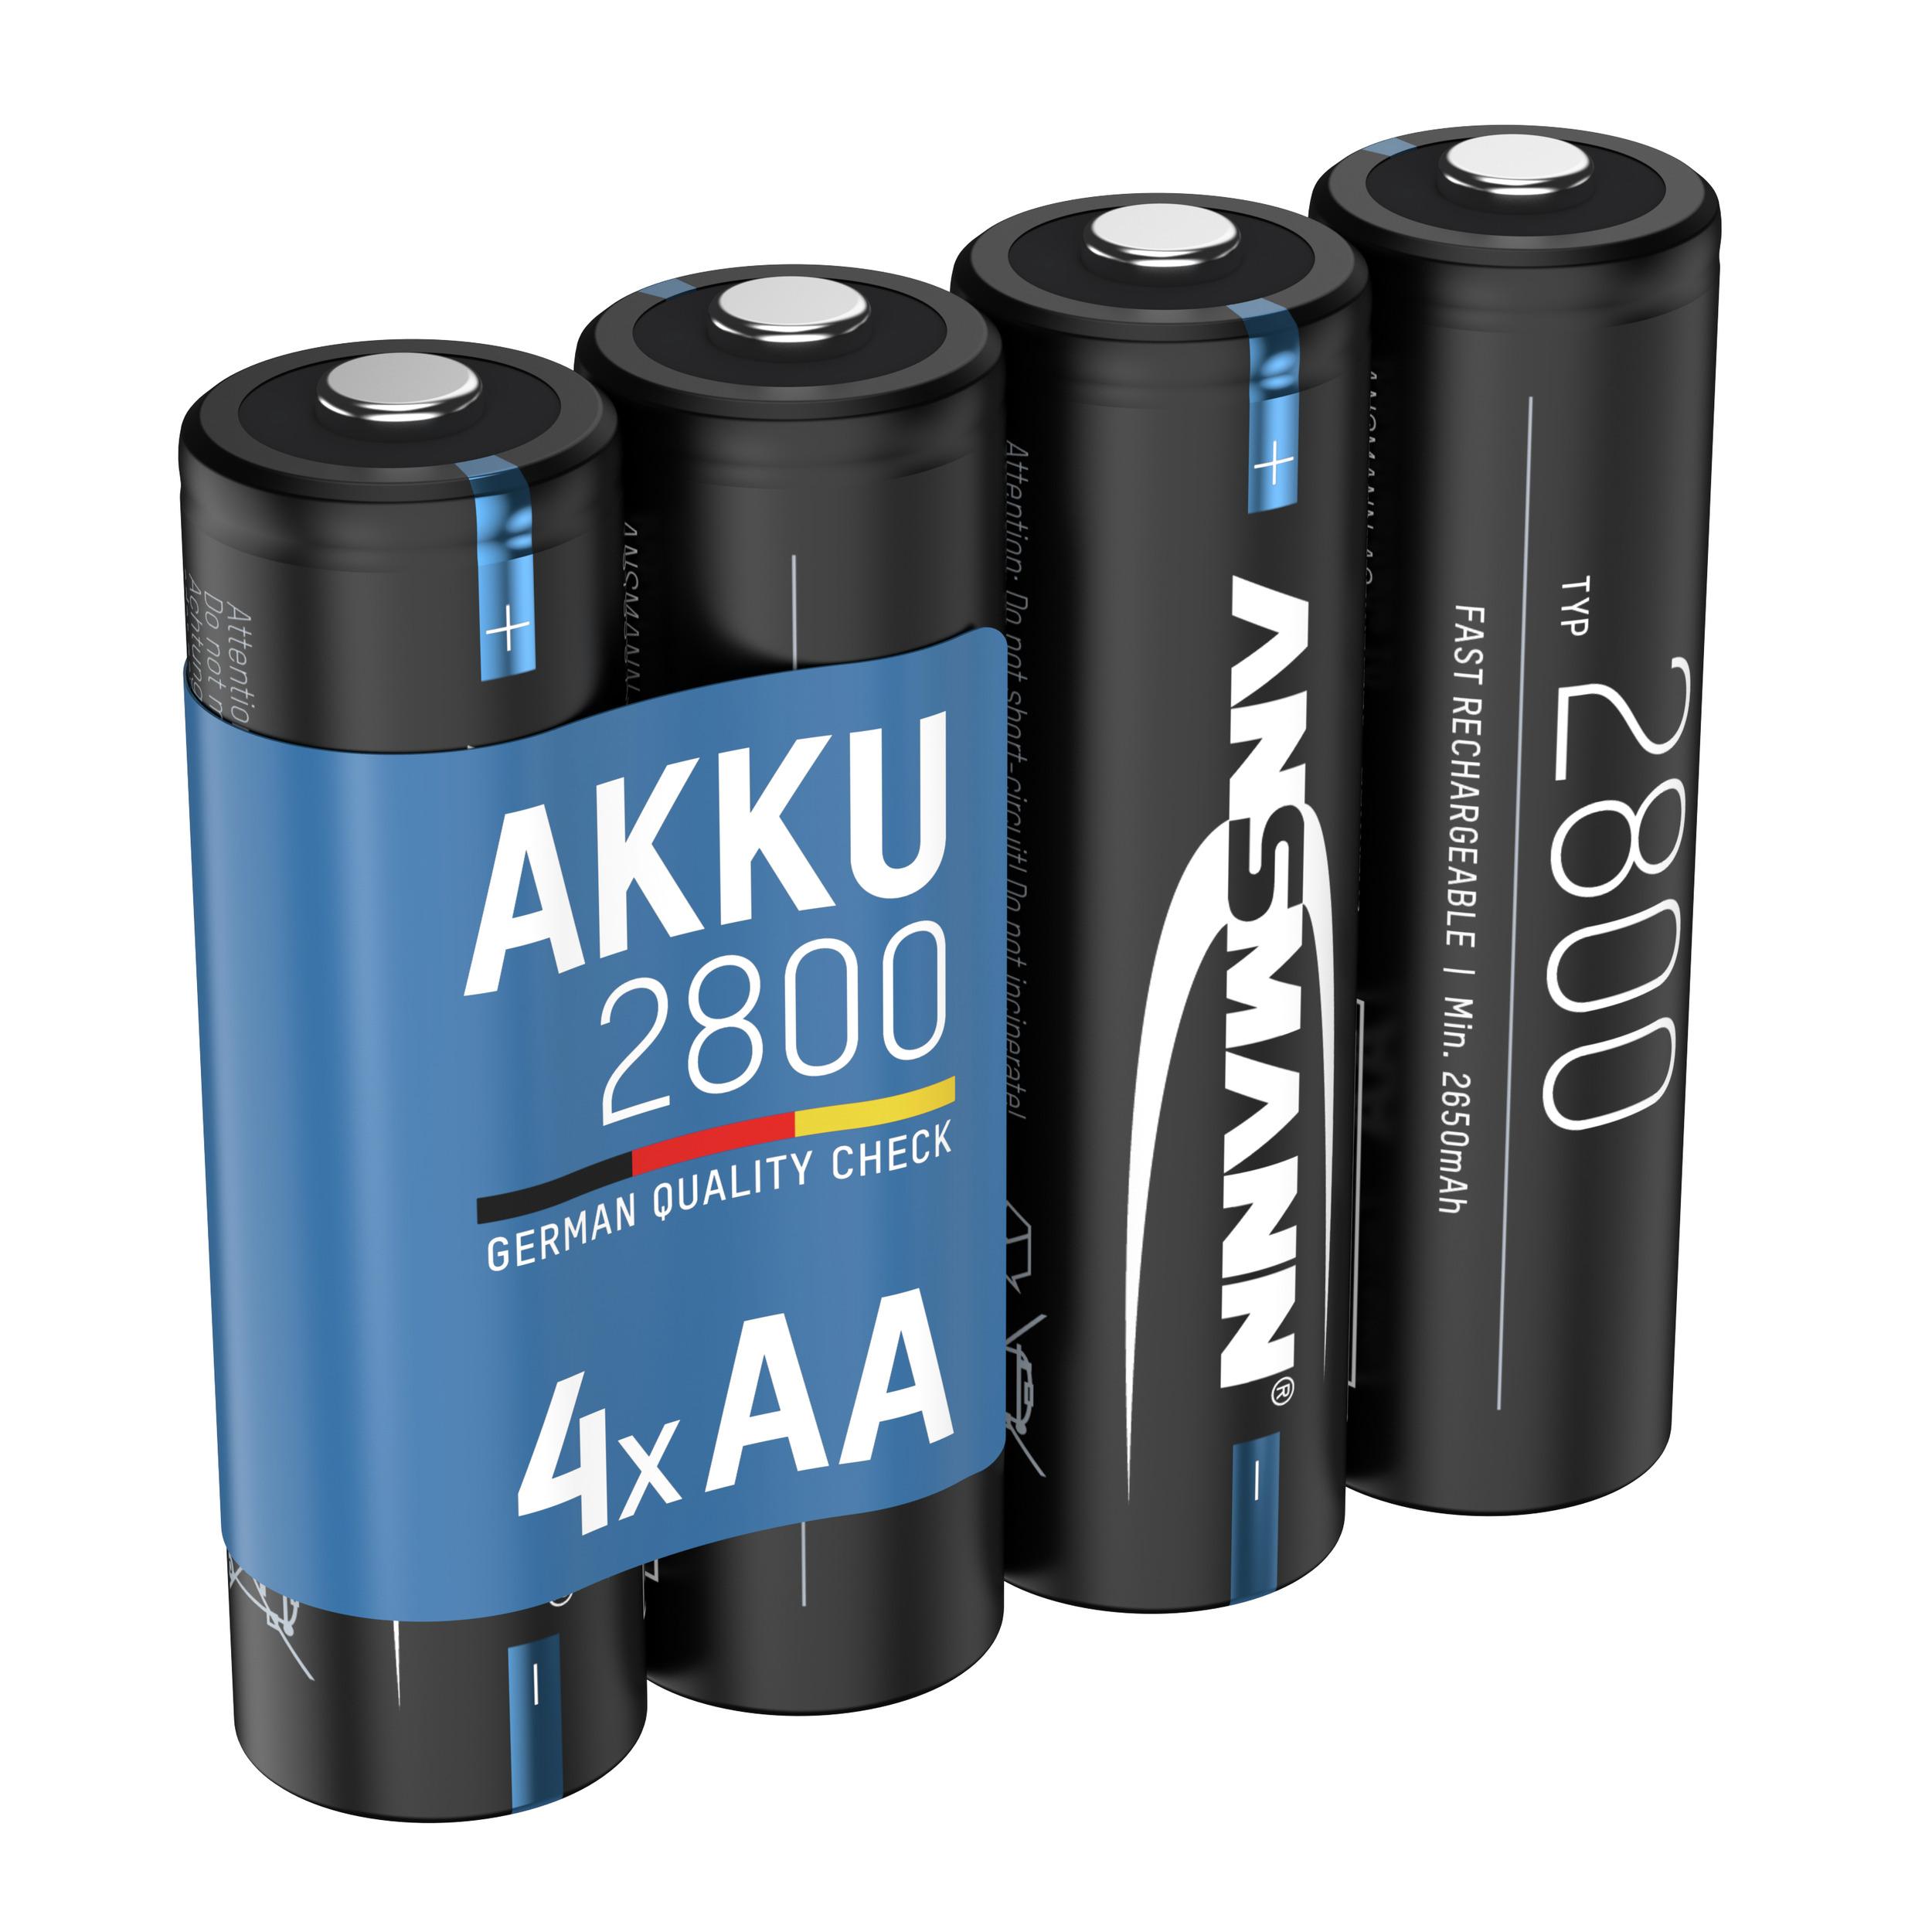 ANSMANN Black Edition Akku (NiMH), 4 Mignon 2800 wiederaufladbar mAh Stück Volt, AA 2800 Nickel-Metallhydrid Batterie, 1.2